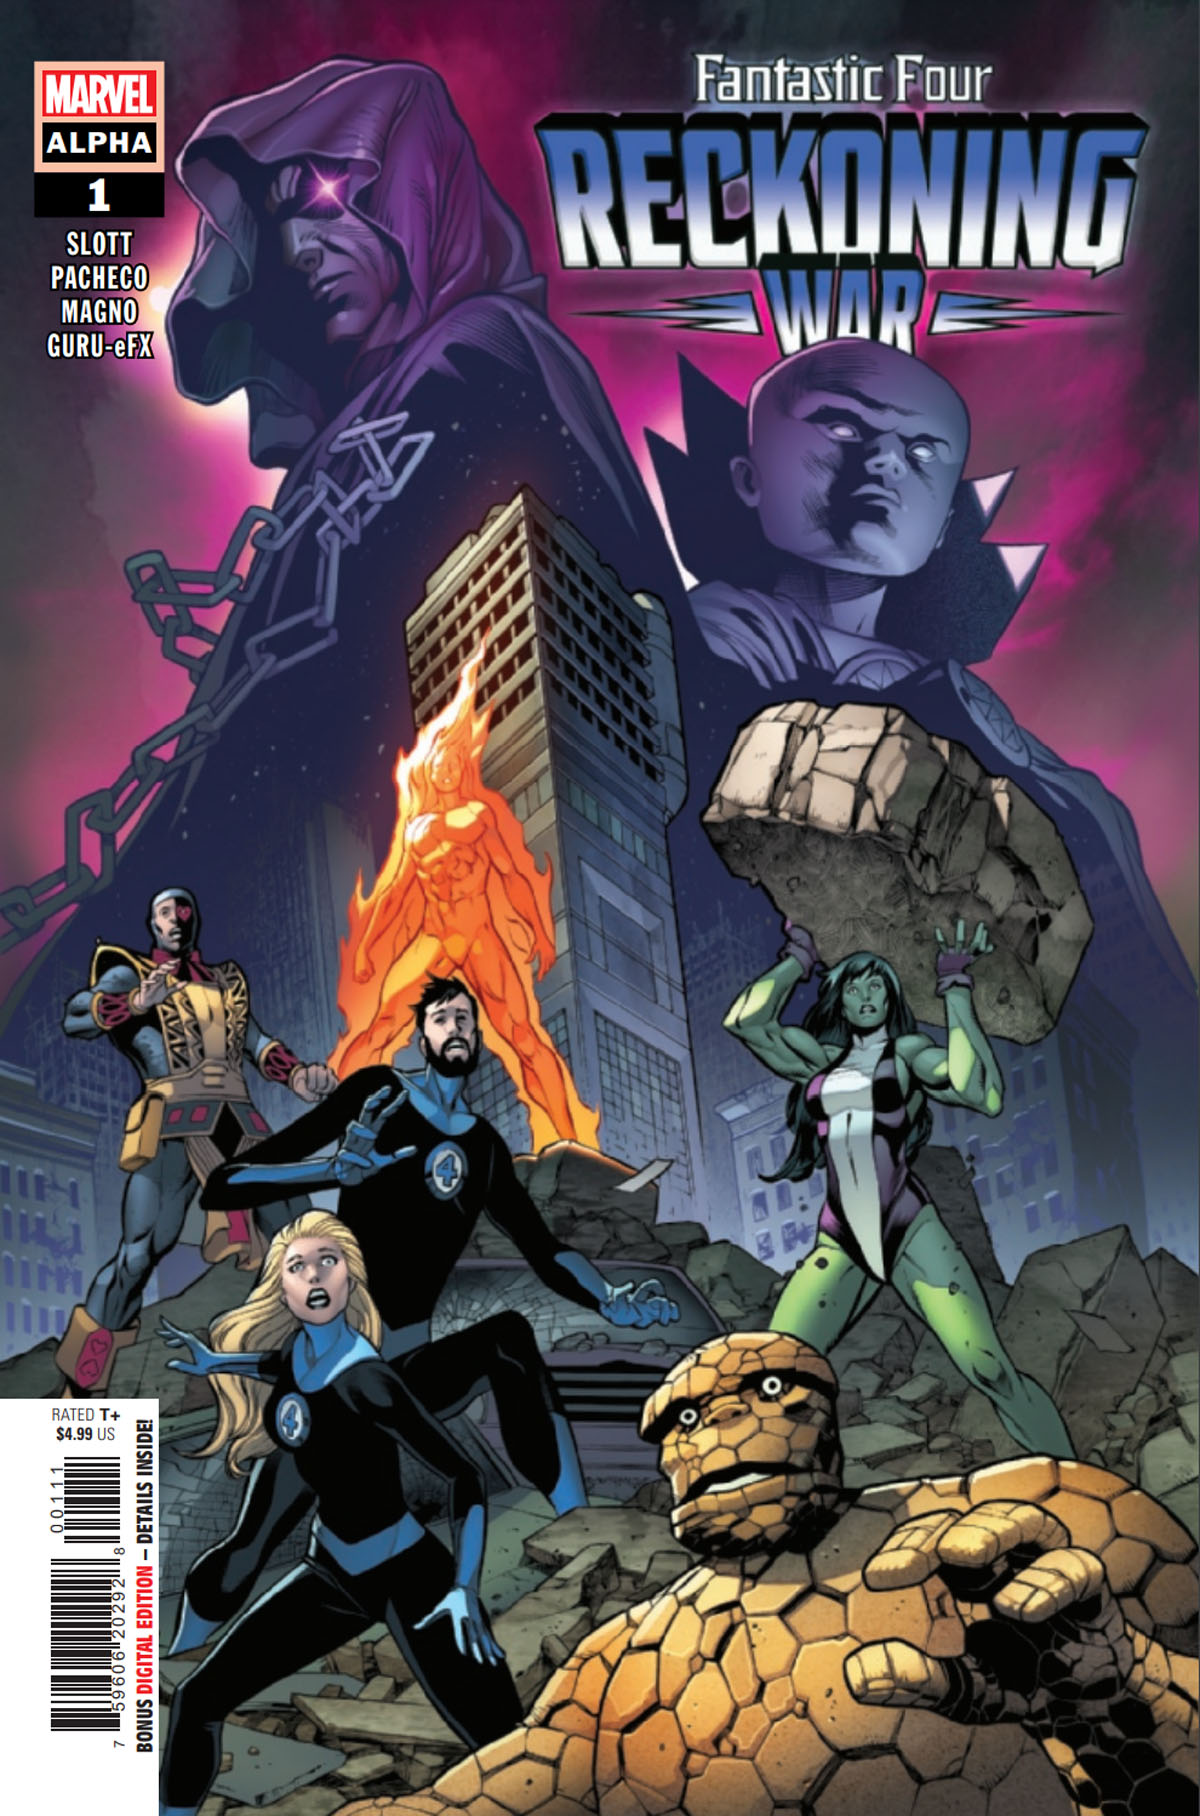 Fantastic Four: Reckoning War #1 cover